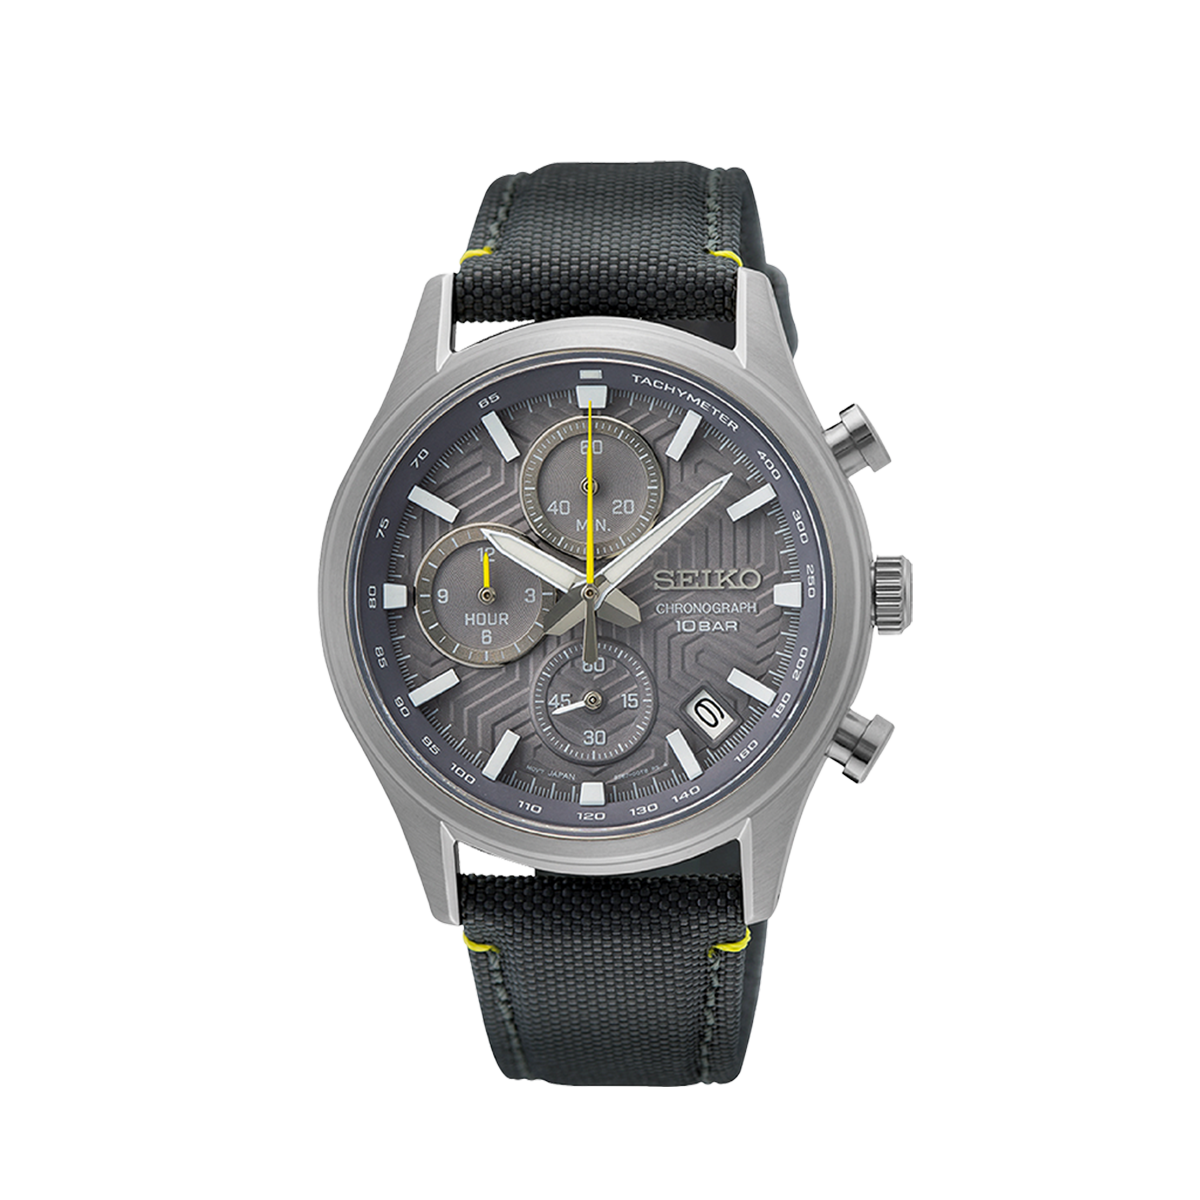 Buy Online Titan Octane Classic Sporty Black Dial Chronograph Leather Strap  watch for Men - 90154nl01 | Titan